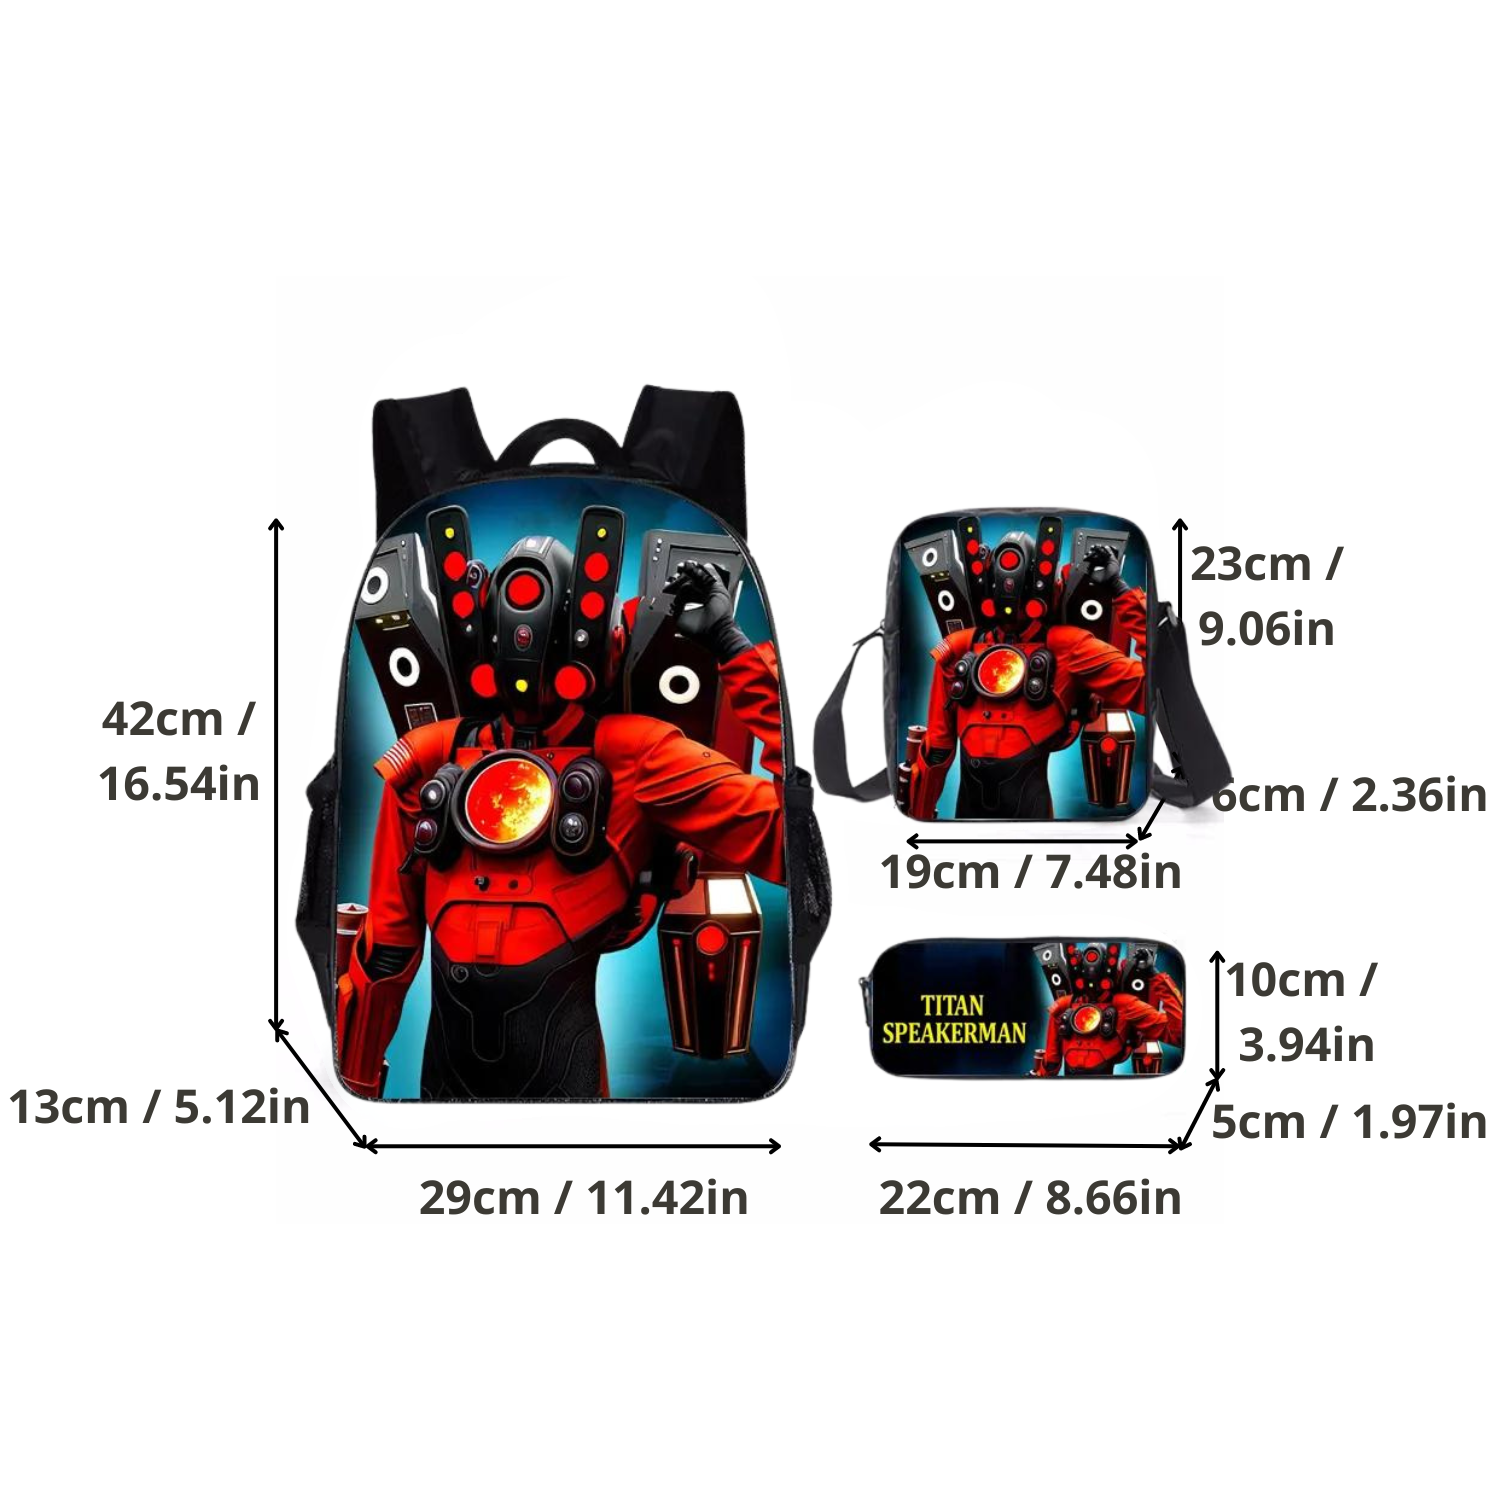 Superhero Tech Gear Backpack Set - Red Armor Edition